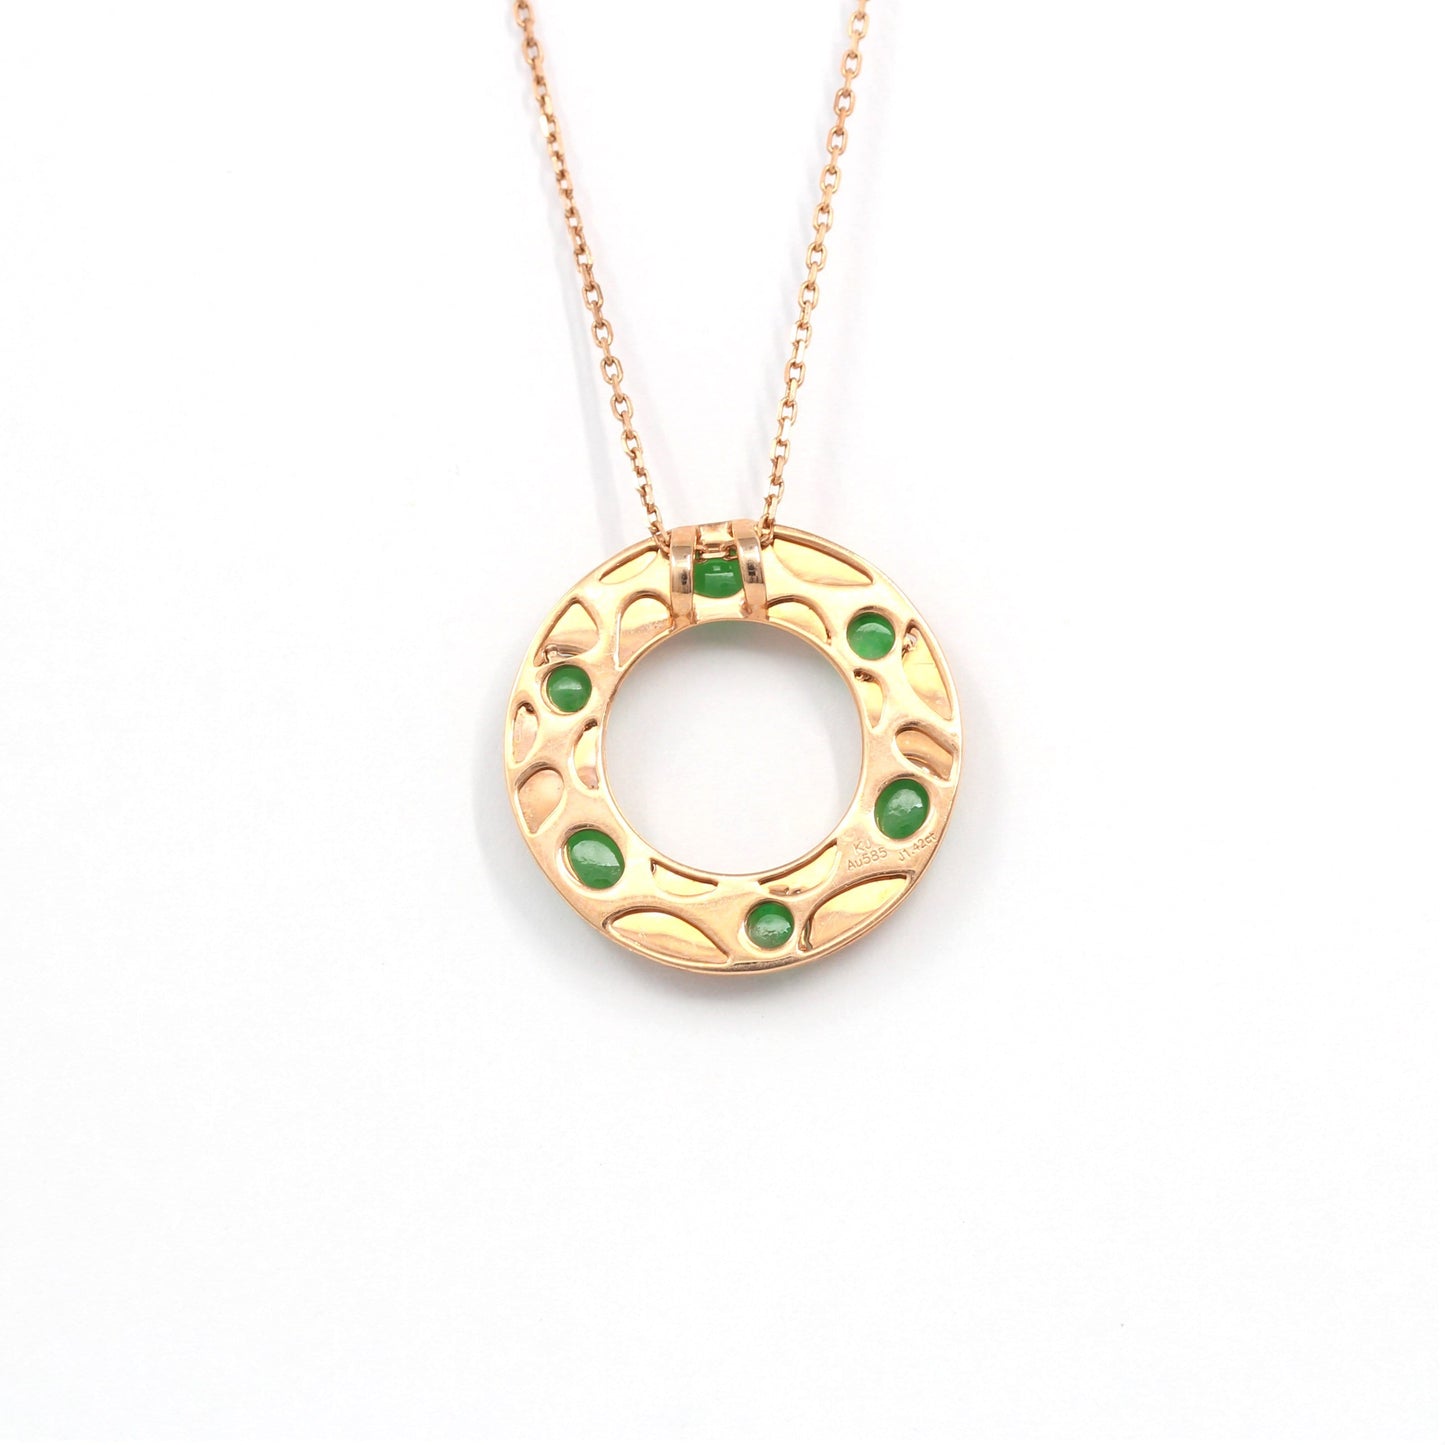 RealJade¨ "Alexandra" 14k Rose Gold & Genuine Imperial Jadeite Pendant Necklace